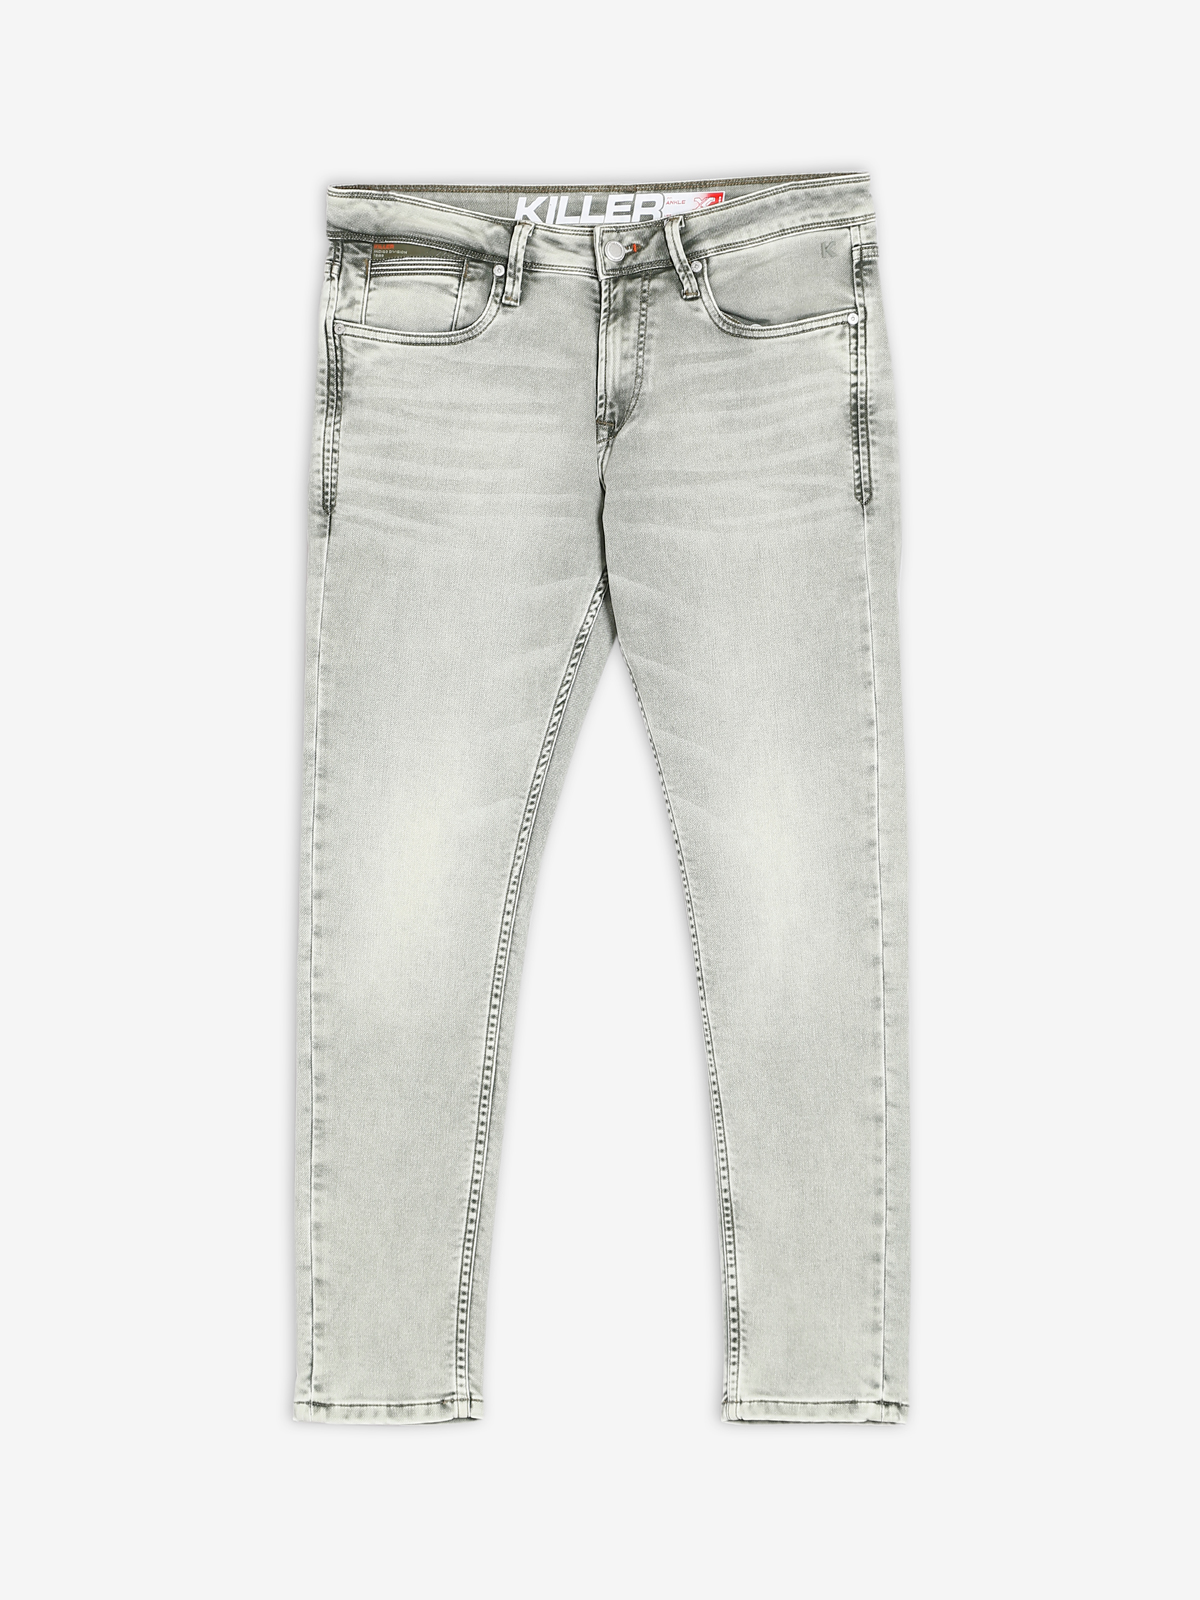 Redchief Light Grey Narrow-Fit Denim Jeans for Men